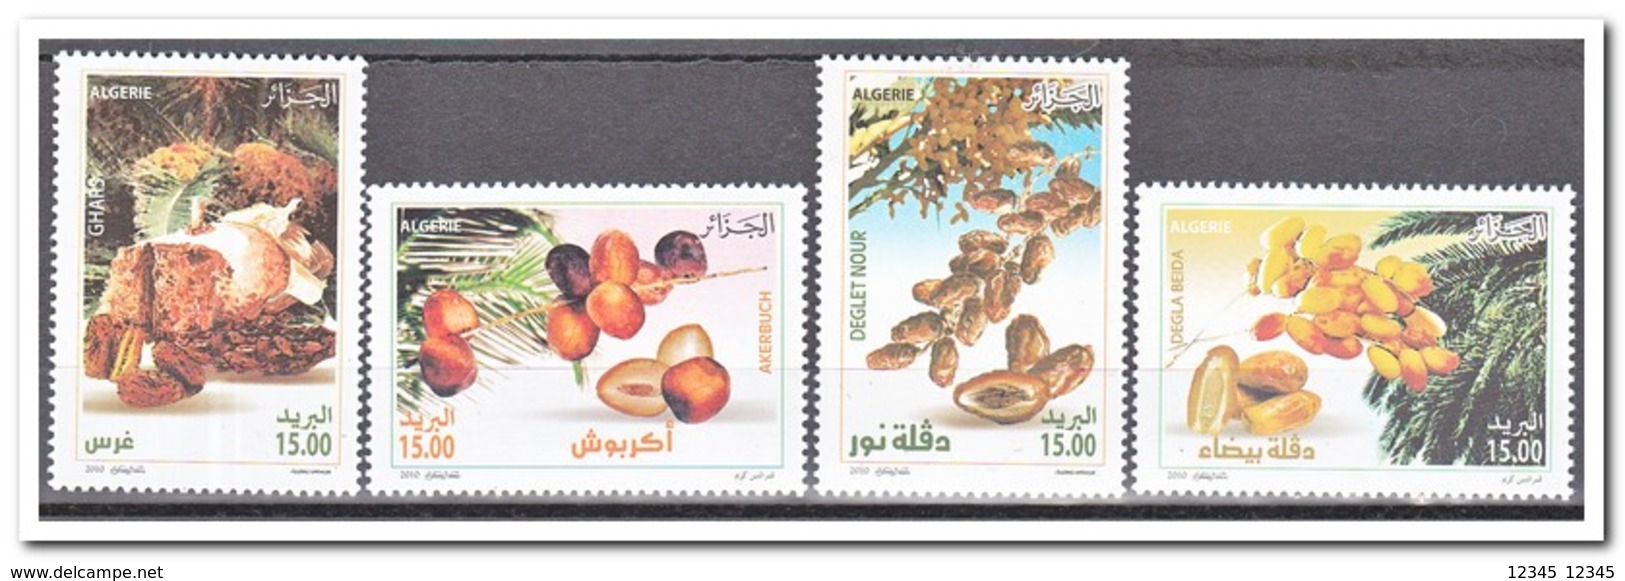 Algerije 2010, Postfris MNH, Fruit ? - Algerije (1962-...)